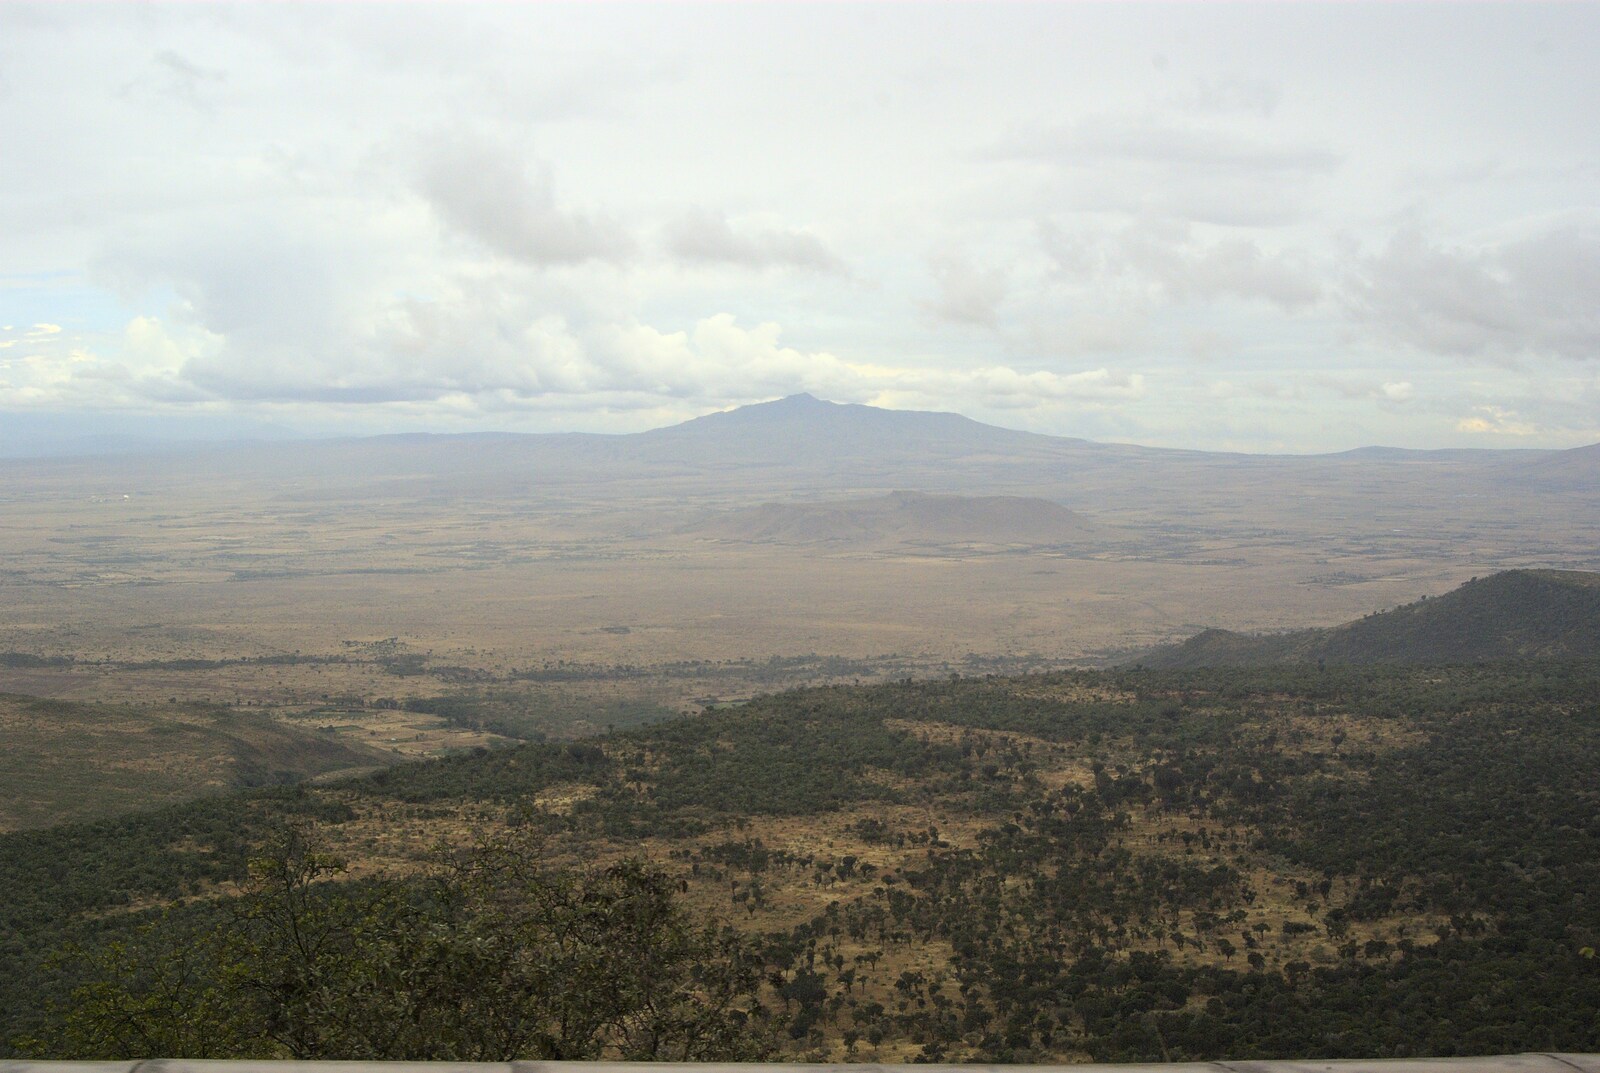 A view over the Rift Valley from Nairobi and the Road to Maasai Mara, Kenya, Africa - 1st November 2010